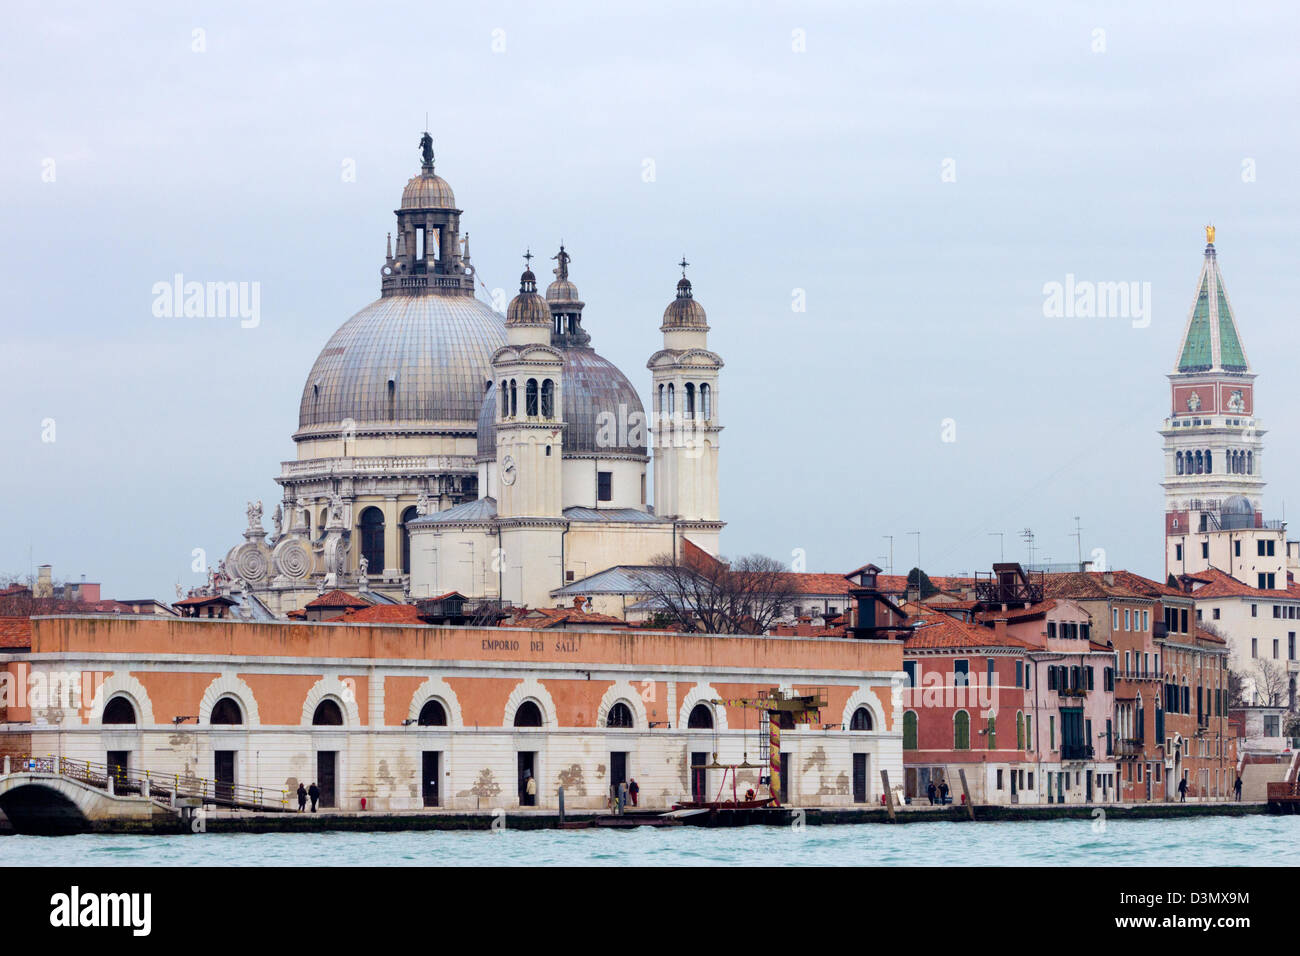 Basilica Santa Maria della Salute and the Campanario bell tower from St Marc's square in the background. Venice, Italy Stock Photo